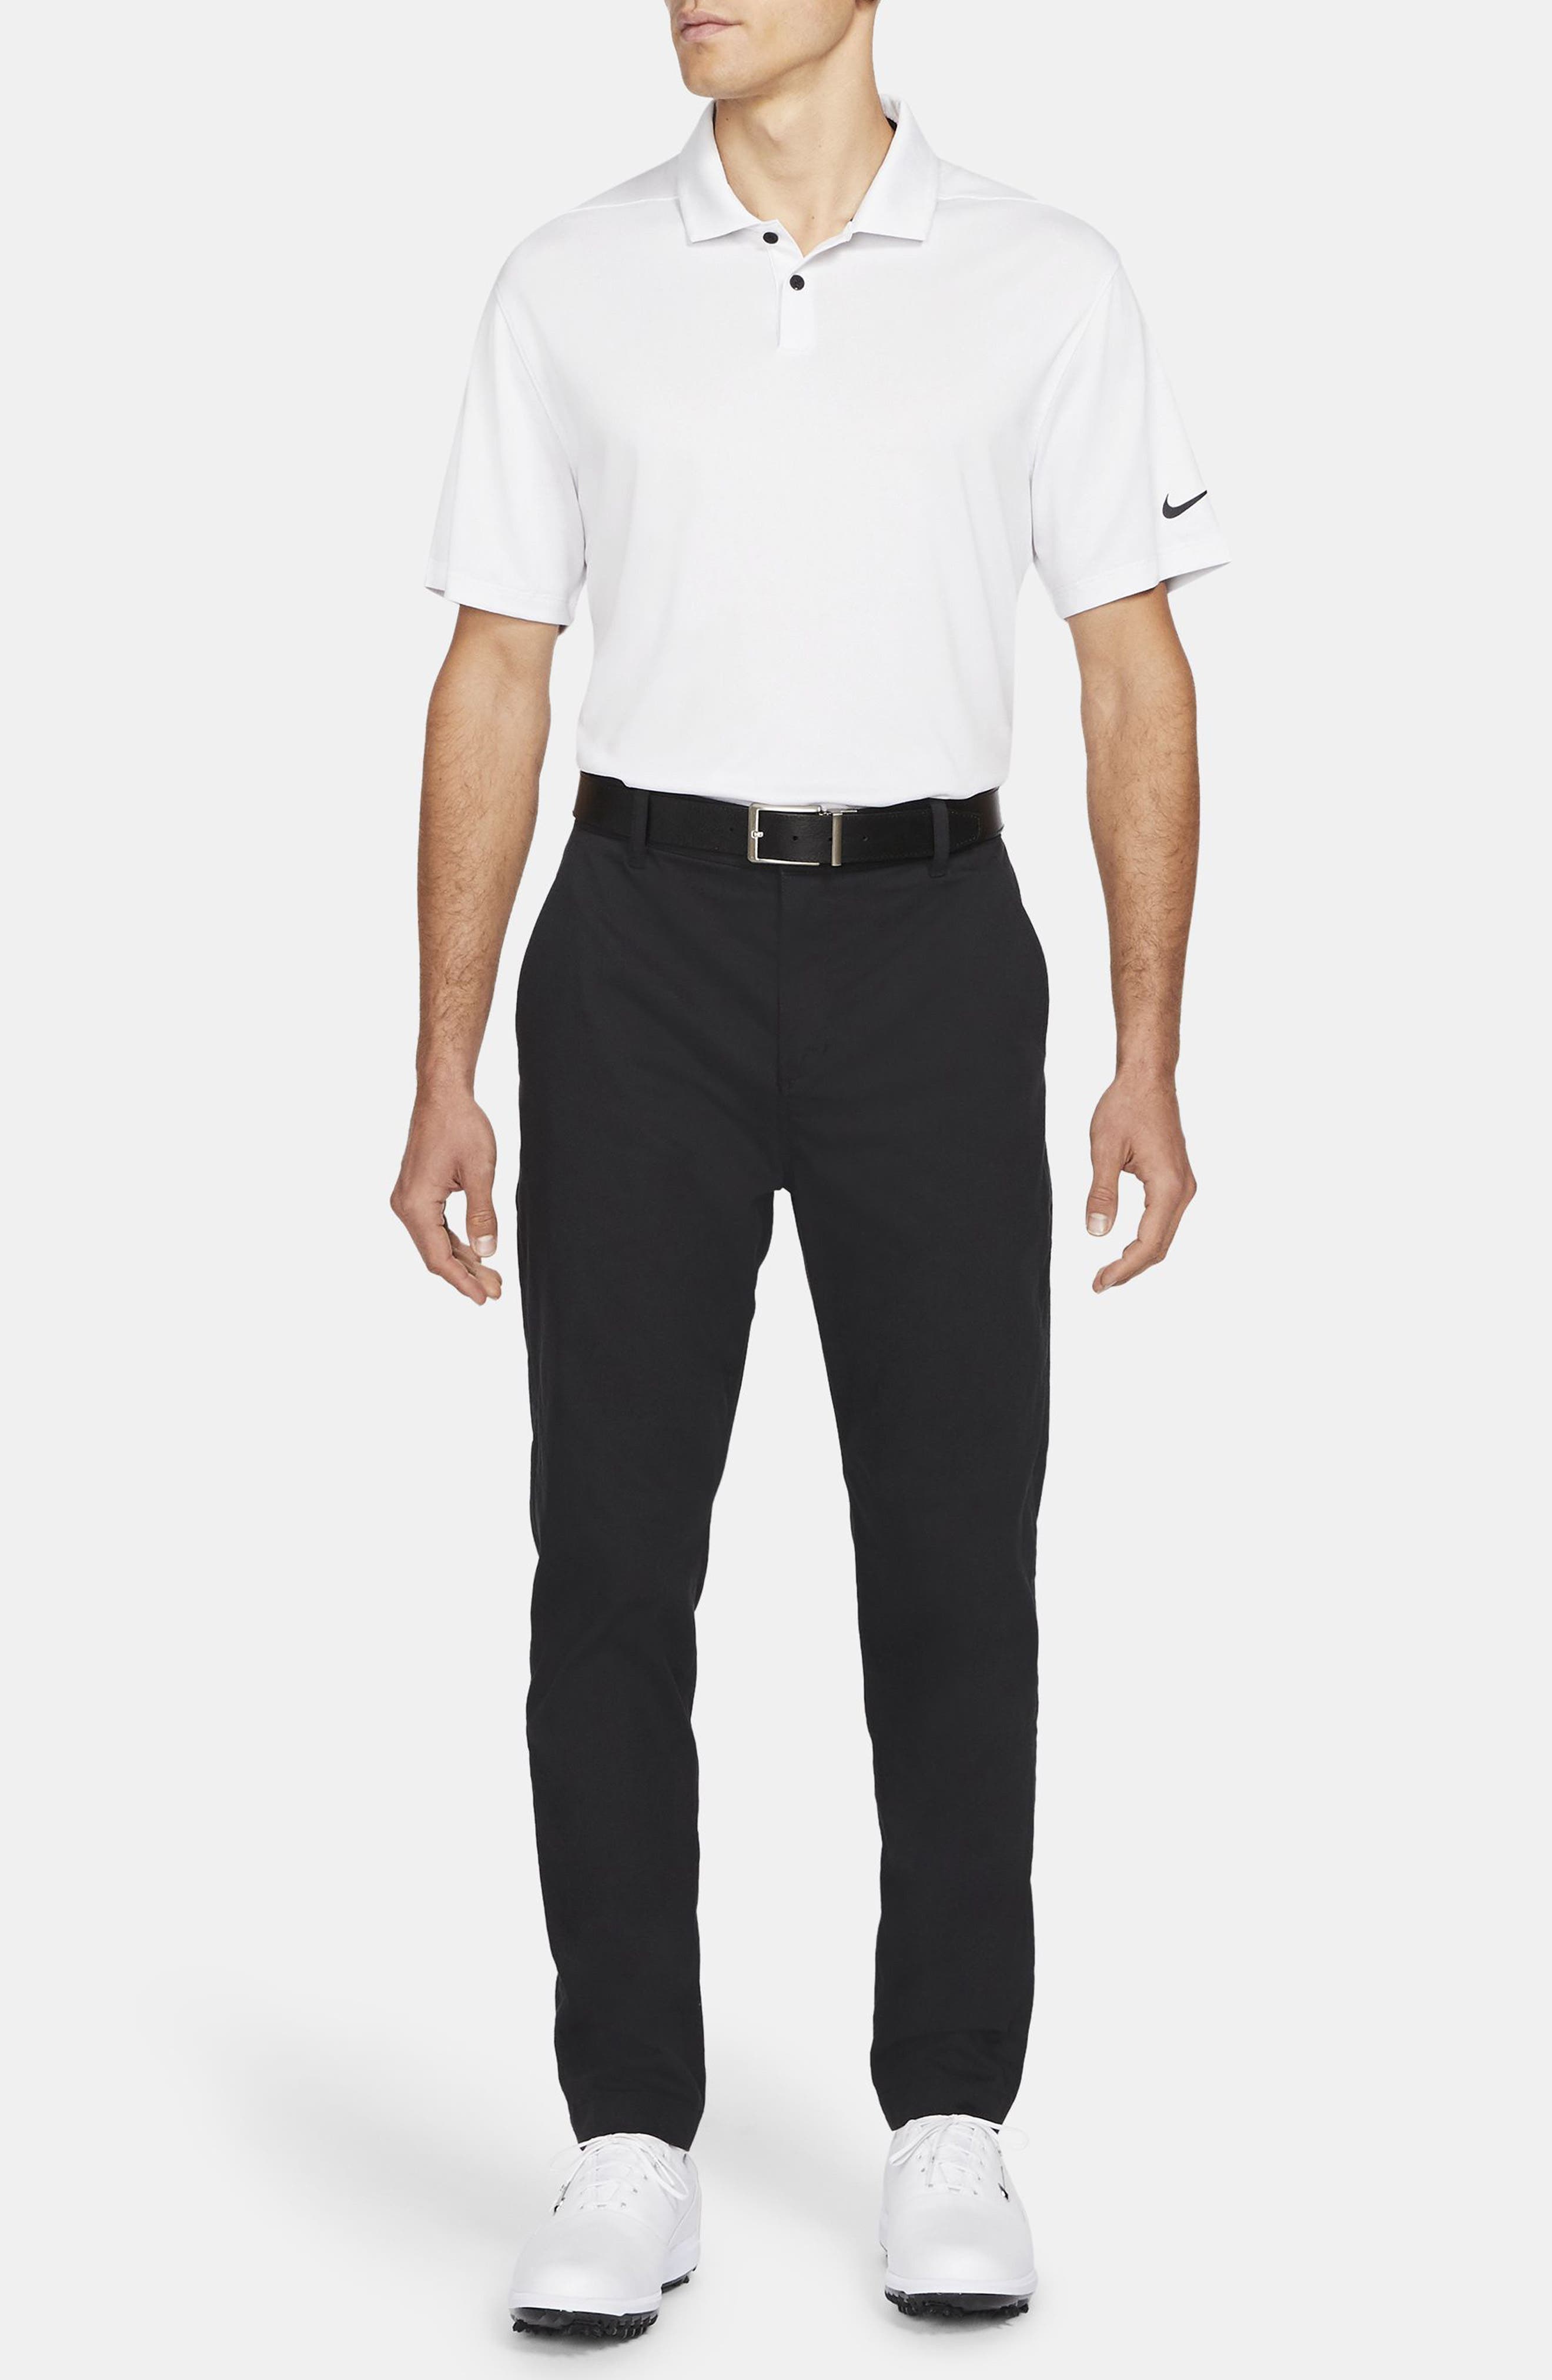 Nike Golf Nike Dri-FIT UV Flat Front Men's Chino Golf Pants | Nordstrom